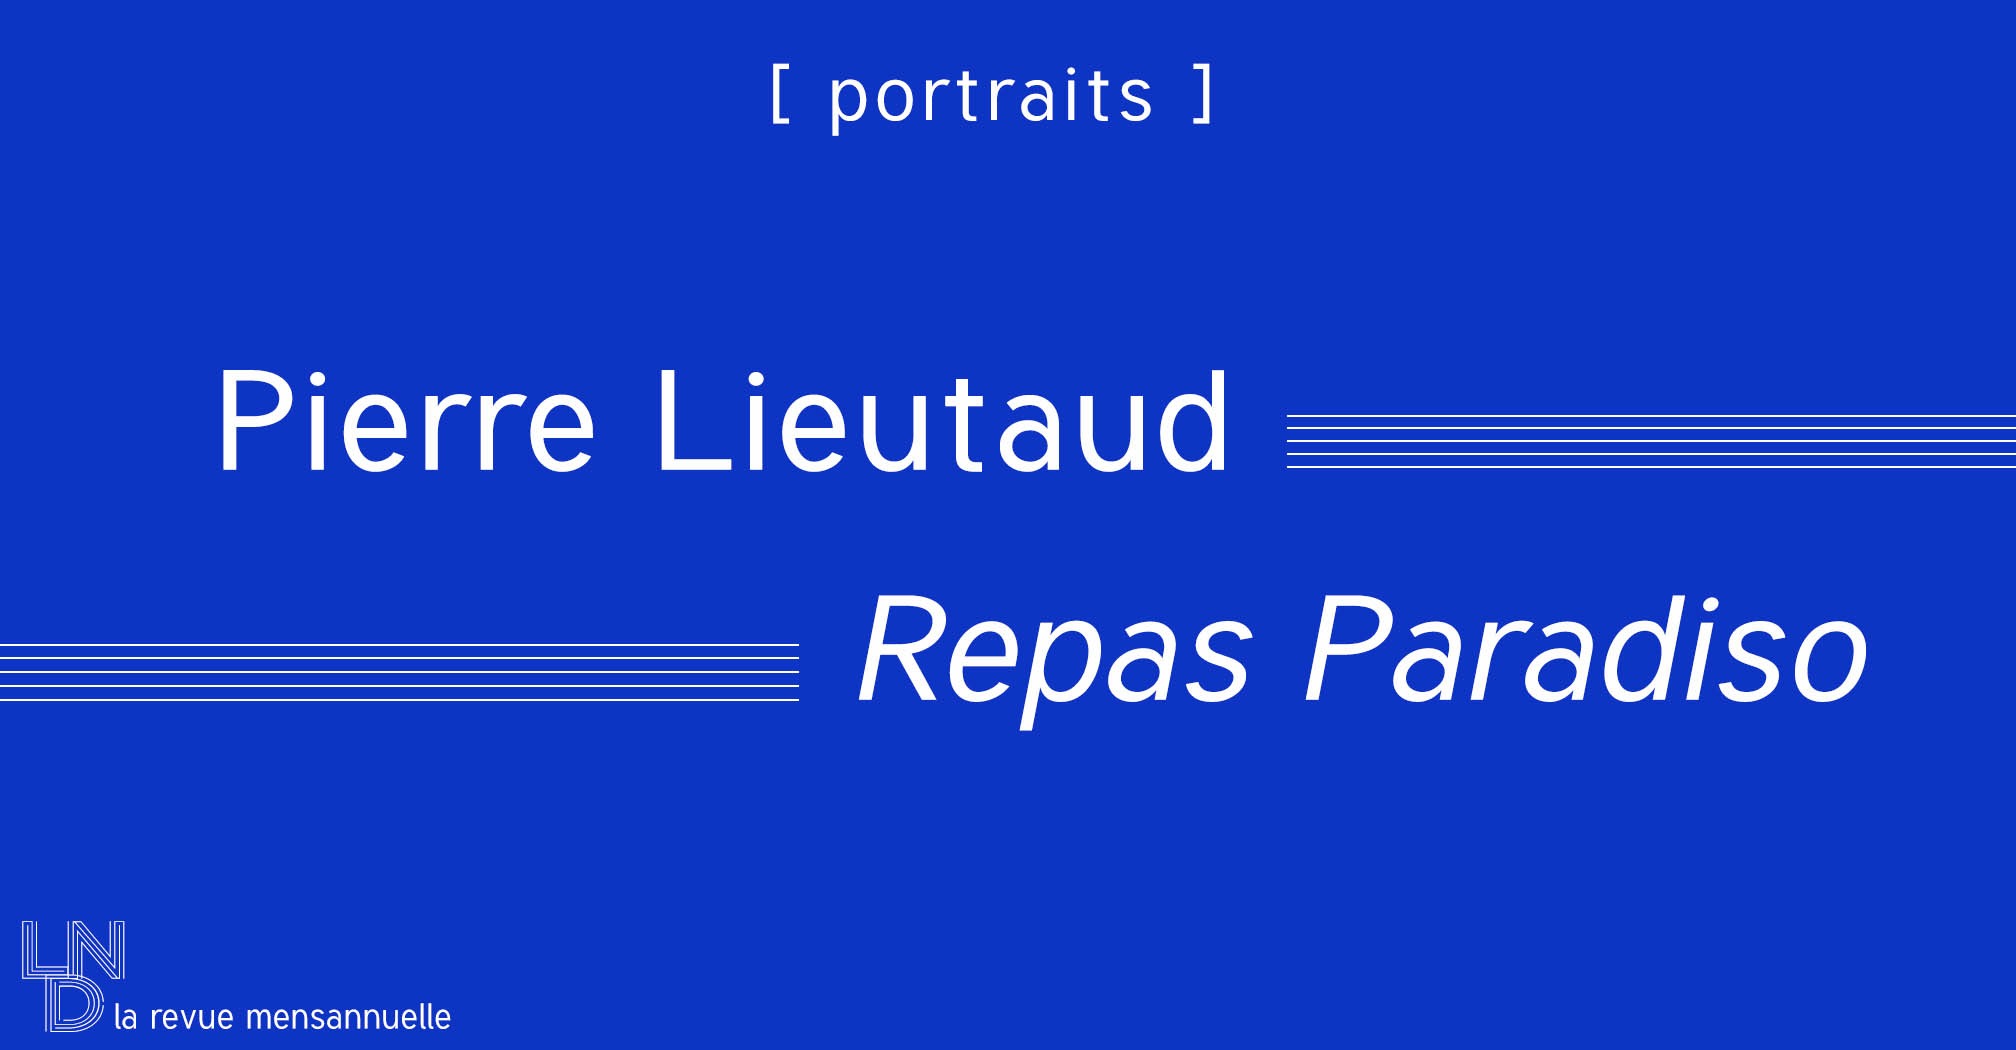 [Portraits] Repas Paradiso - Pierre Lieutaud